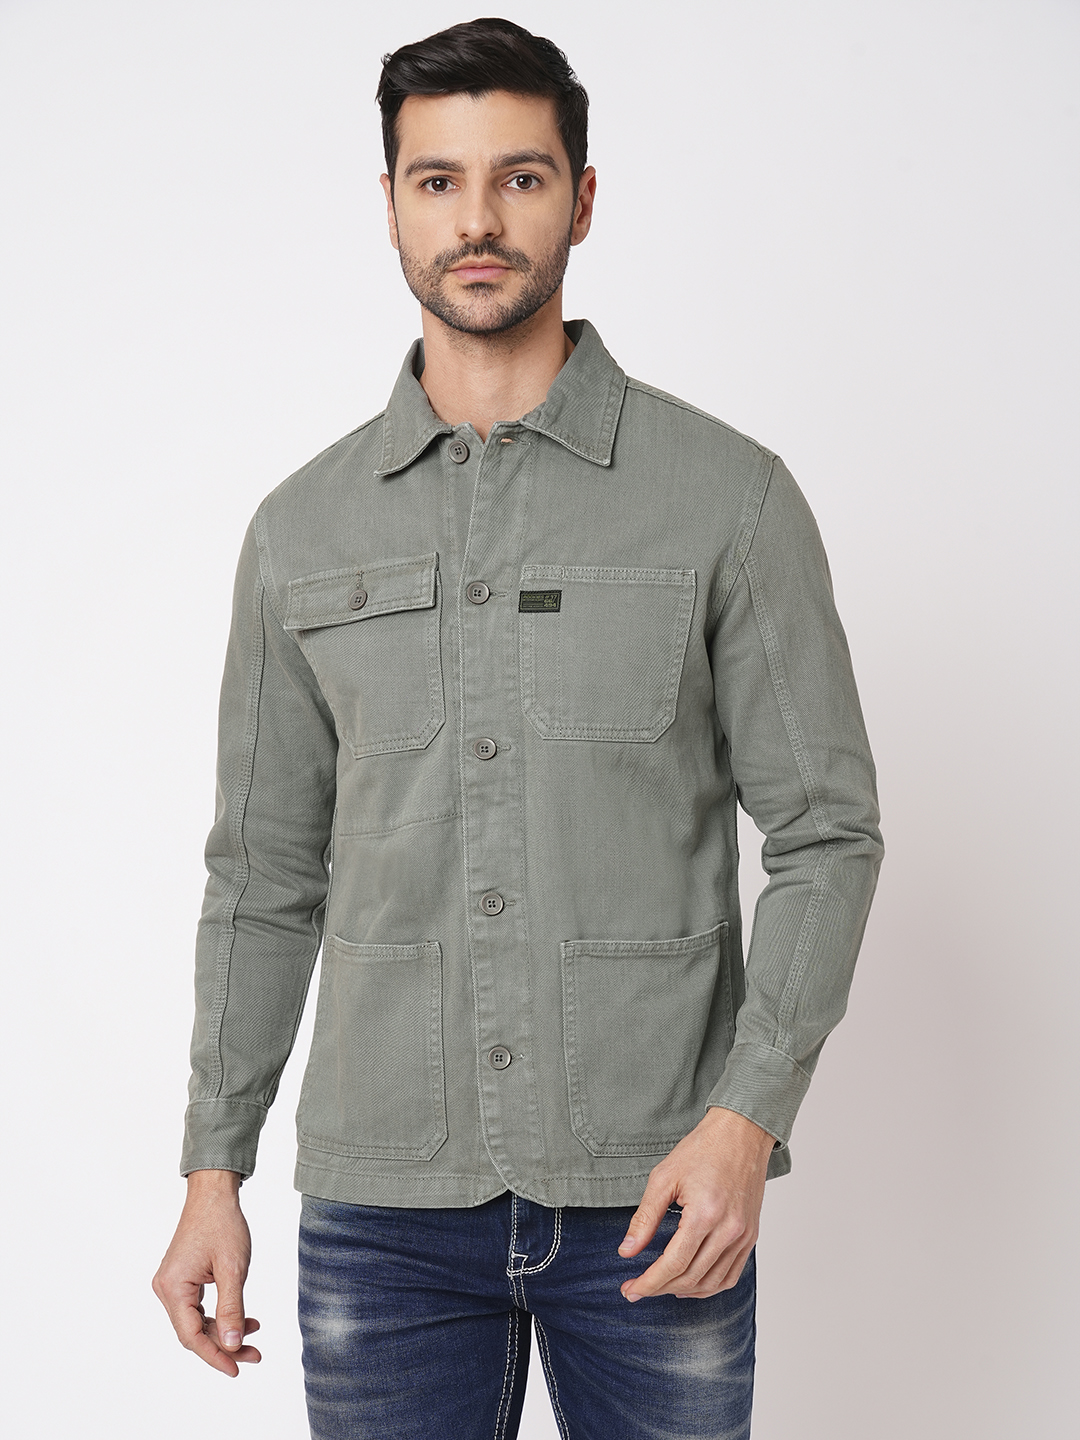 Men's Trendy Ripped Design Casual Button Up Long Sleeve Denim Shirt, Men's  Clothes For Spring Summer Autumn, Tops For Men | Summer Denim Shirt Outfit  Men | suturasonline.com.br